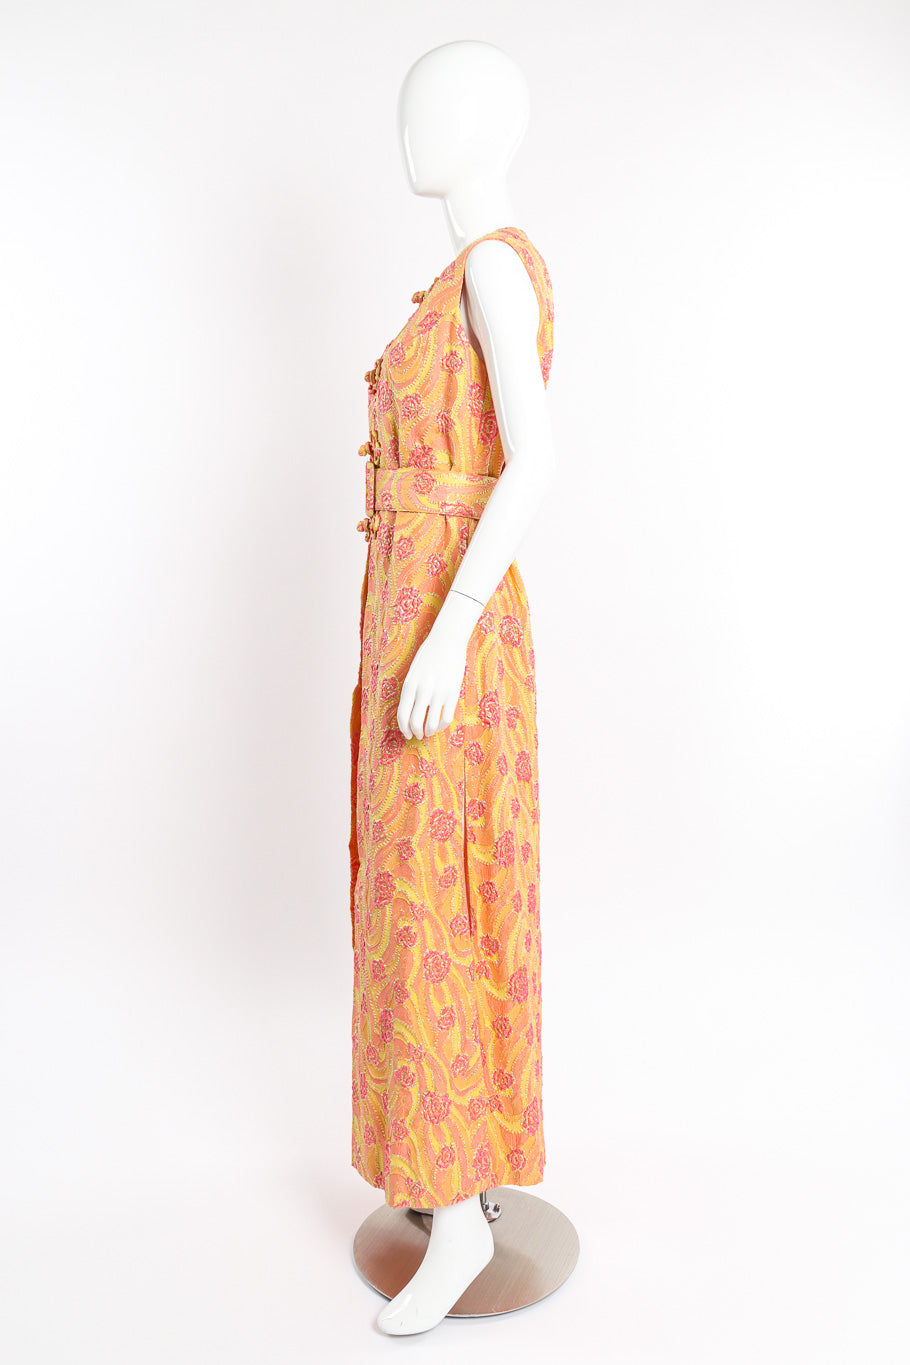 Vintage Sandine Originals Lamé Brocade Tunic Dress side view on mannequin @recessla